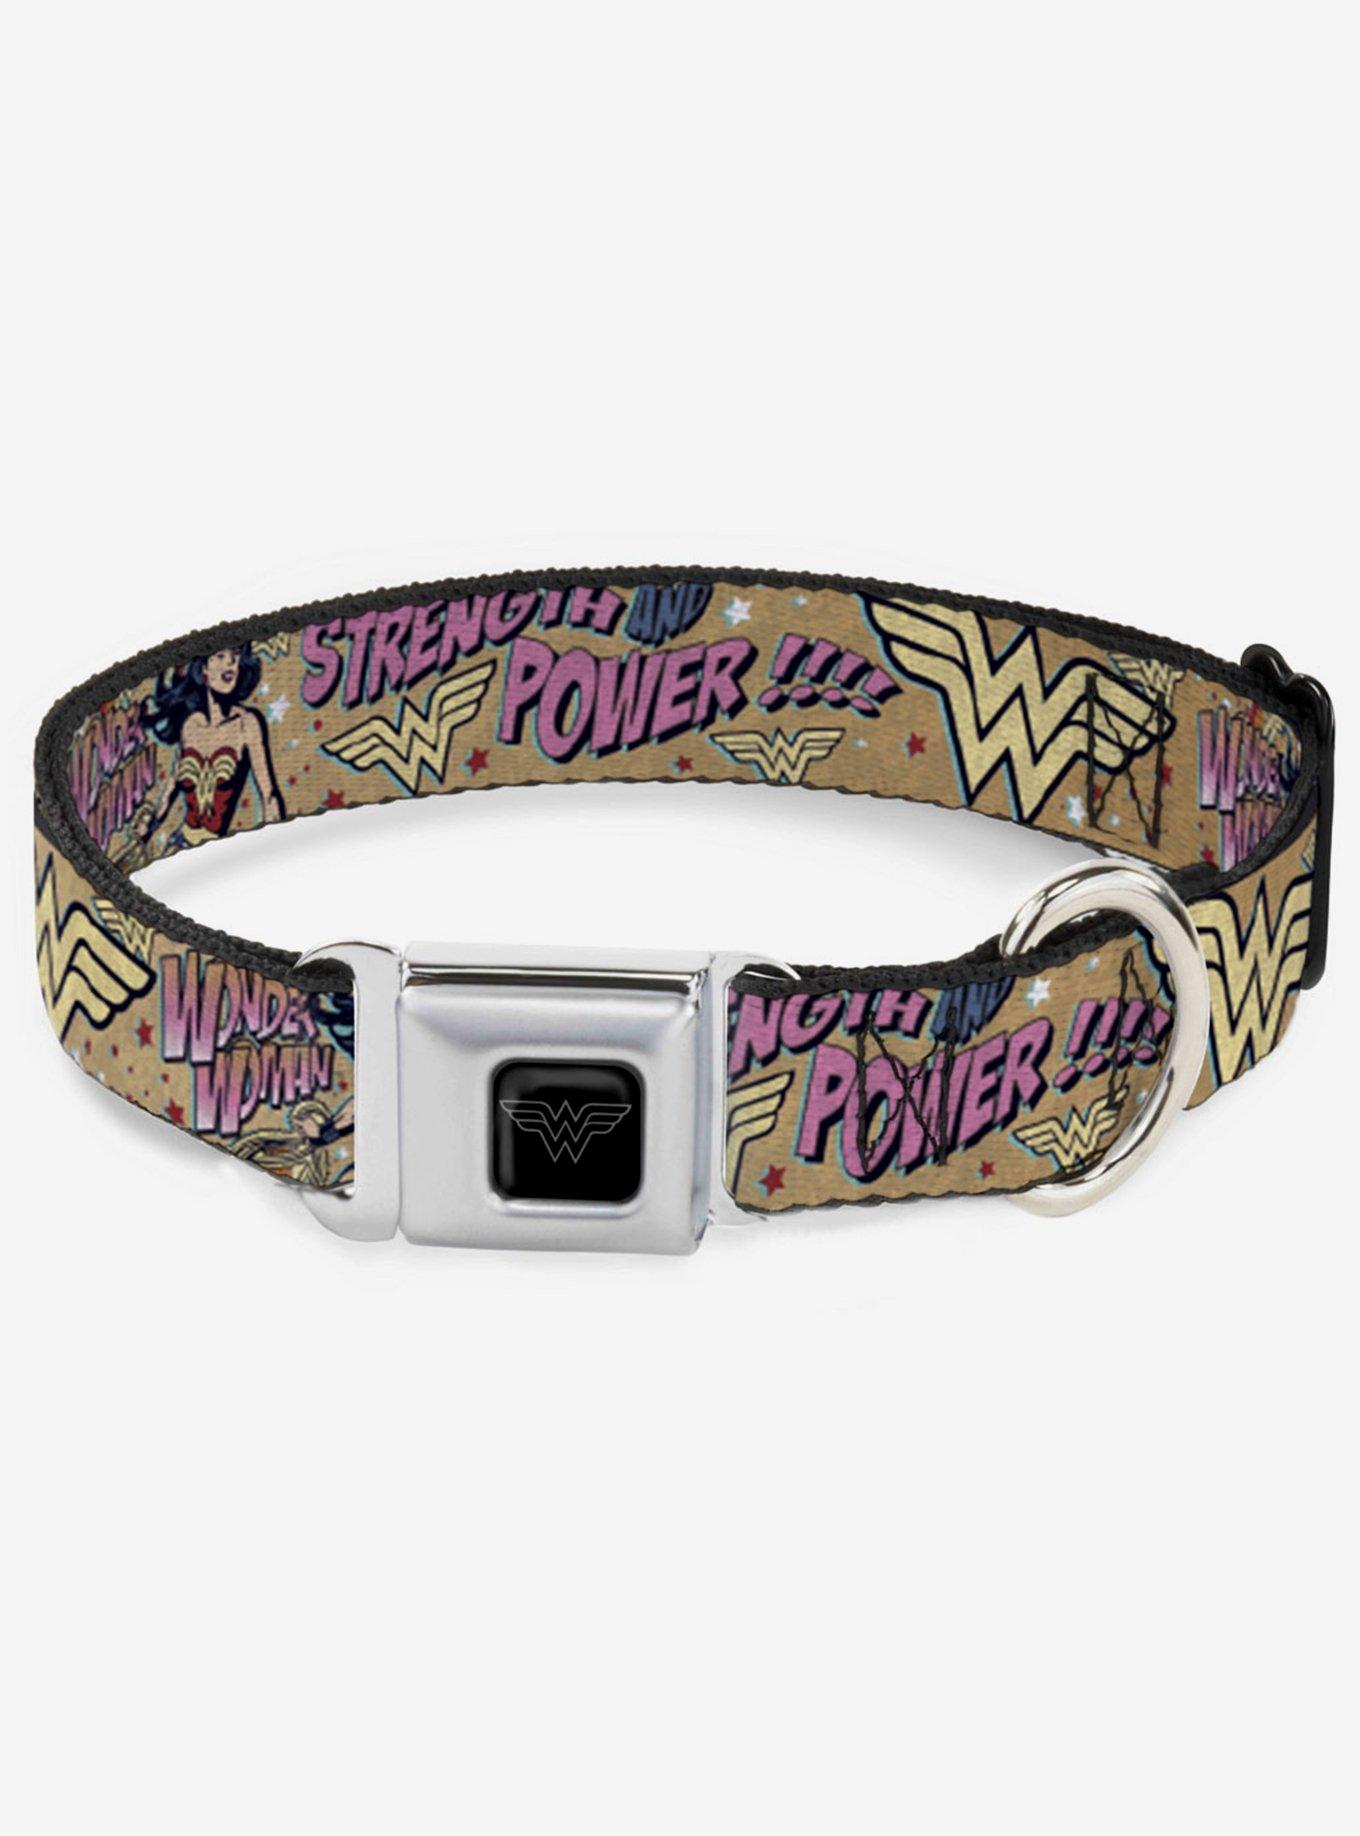 DC Comics Justice League Wonder Woman Strength Power Seatbelt Buckle Dog Collar, MULTICOLOR, hi-res